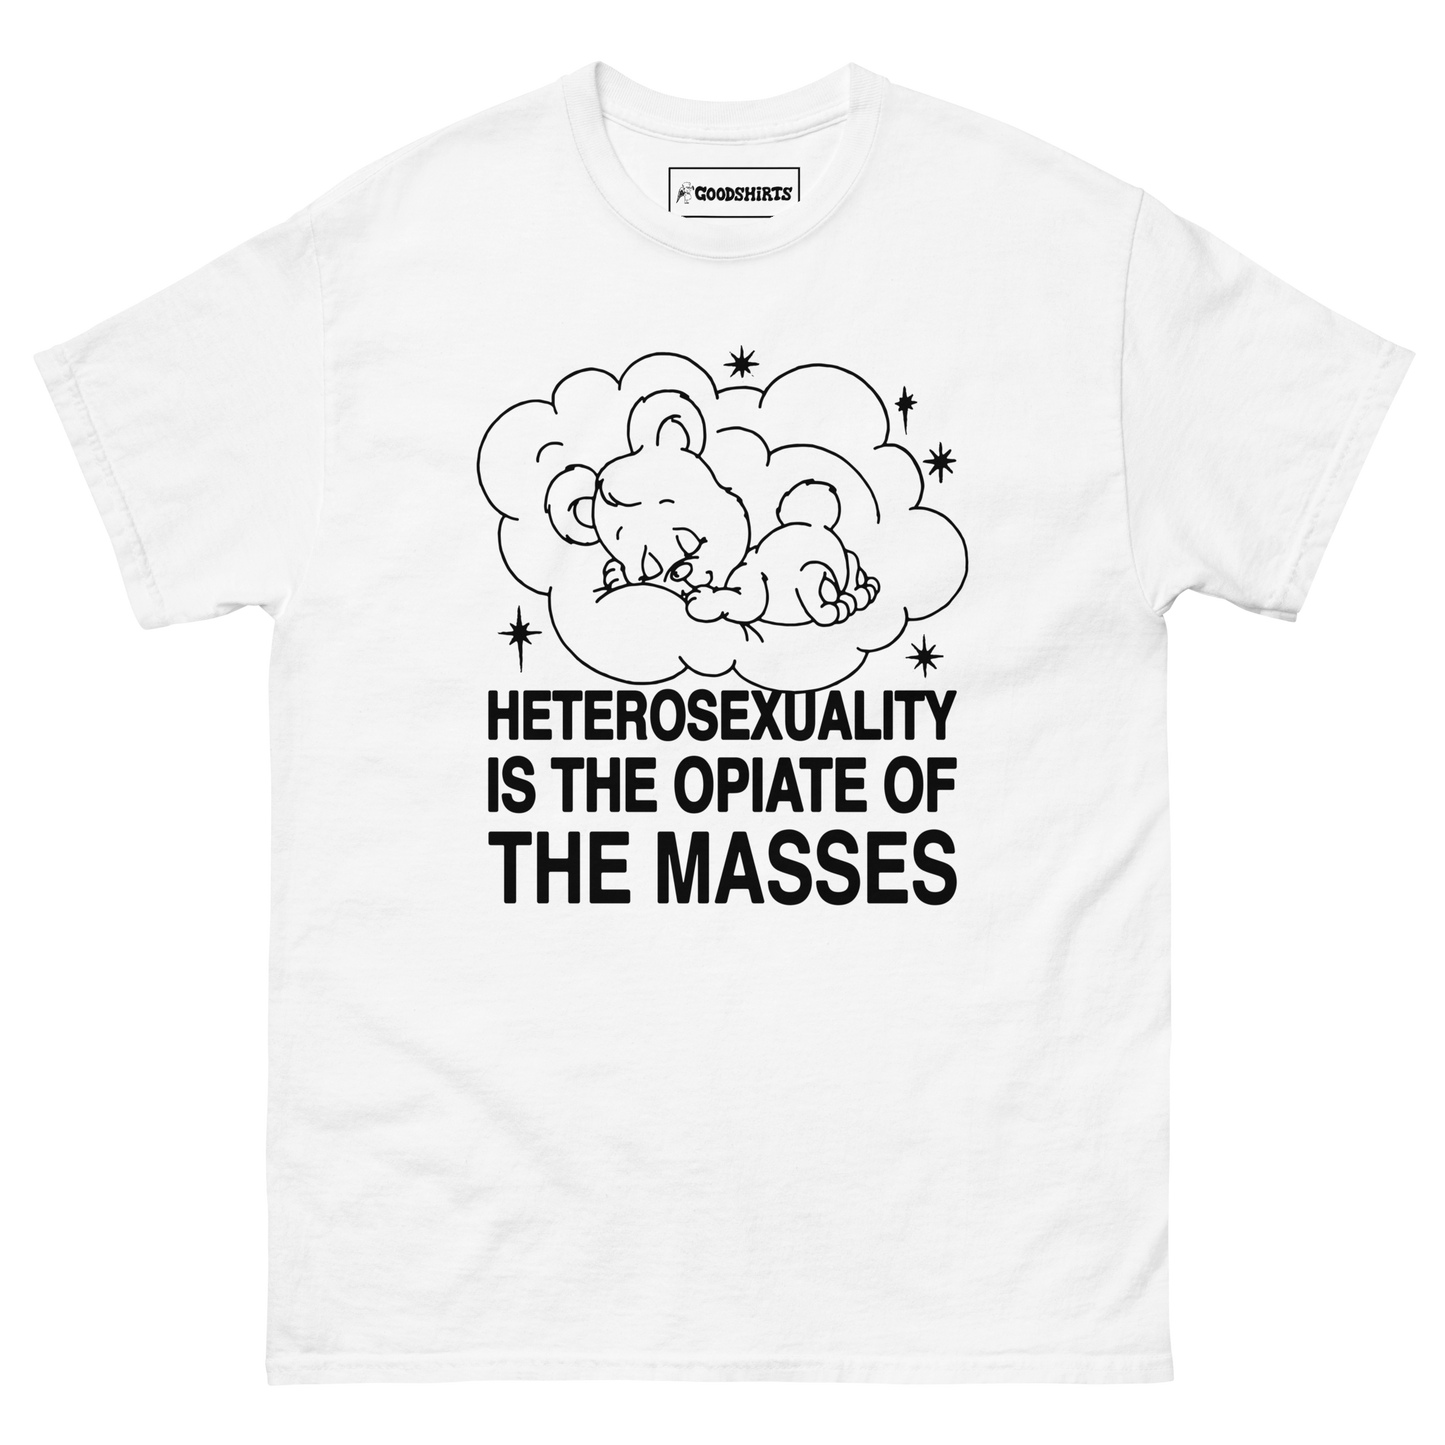 Heterosexuality Is The Opiate Of The Masses.